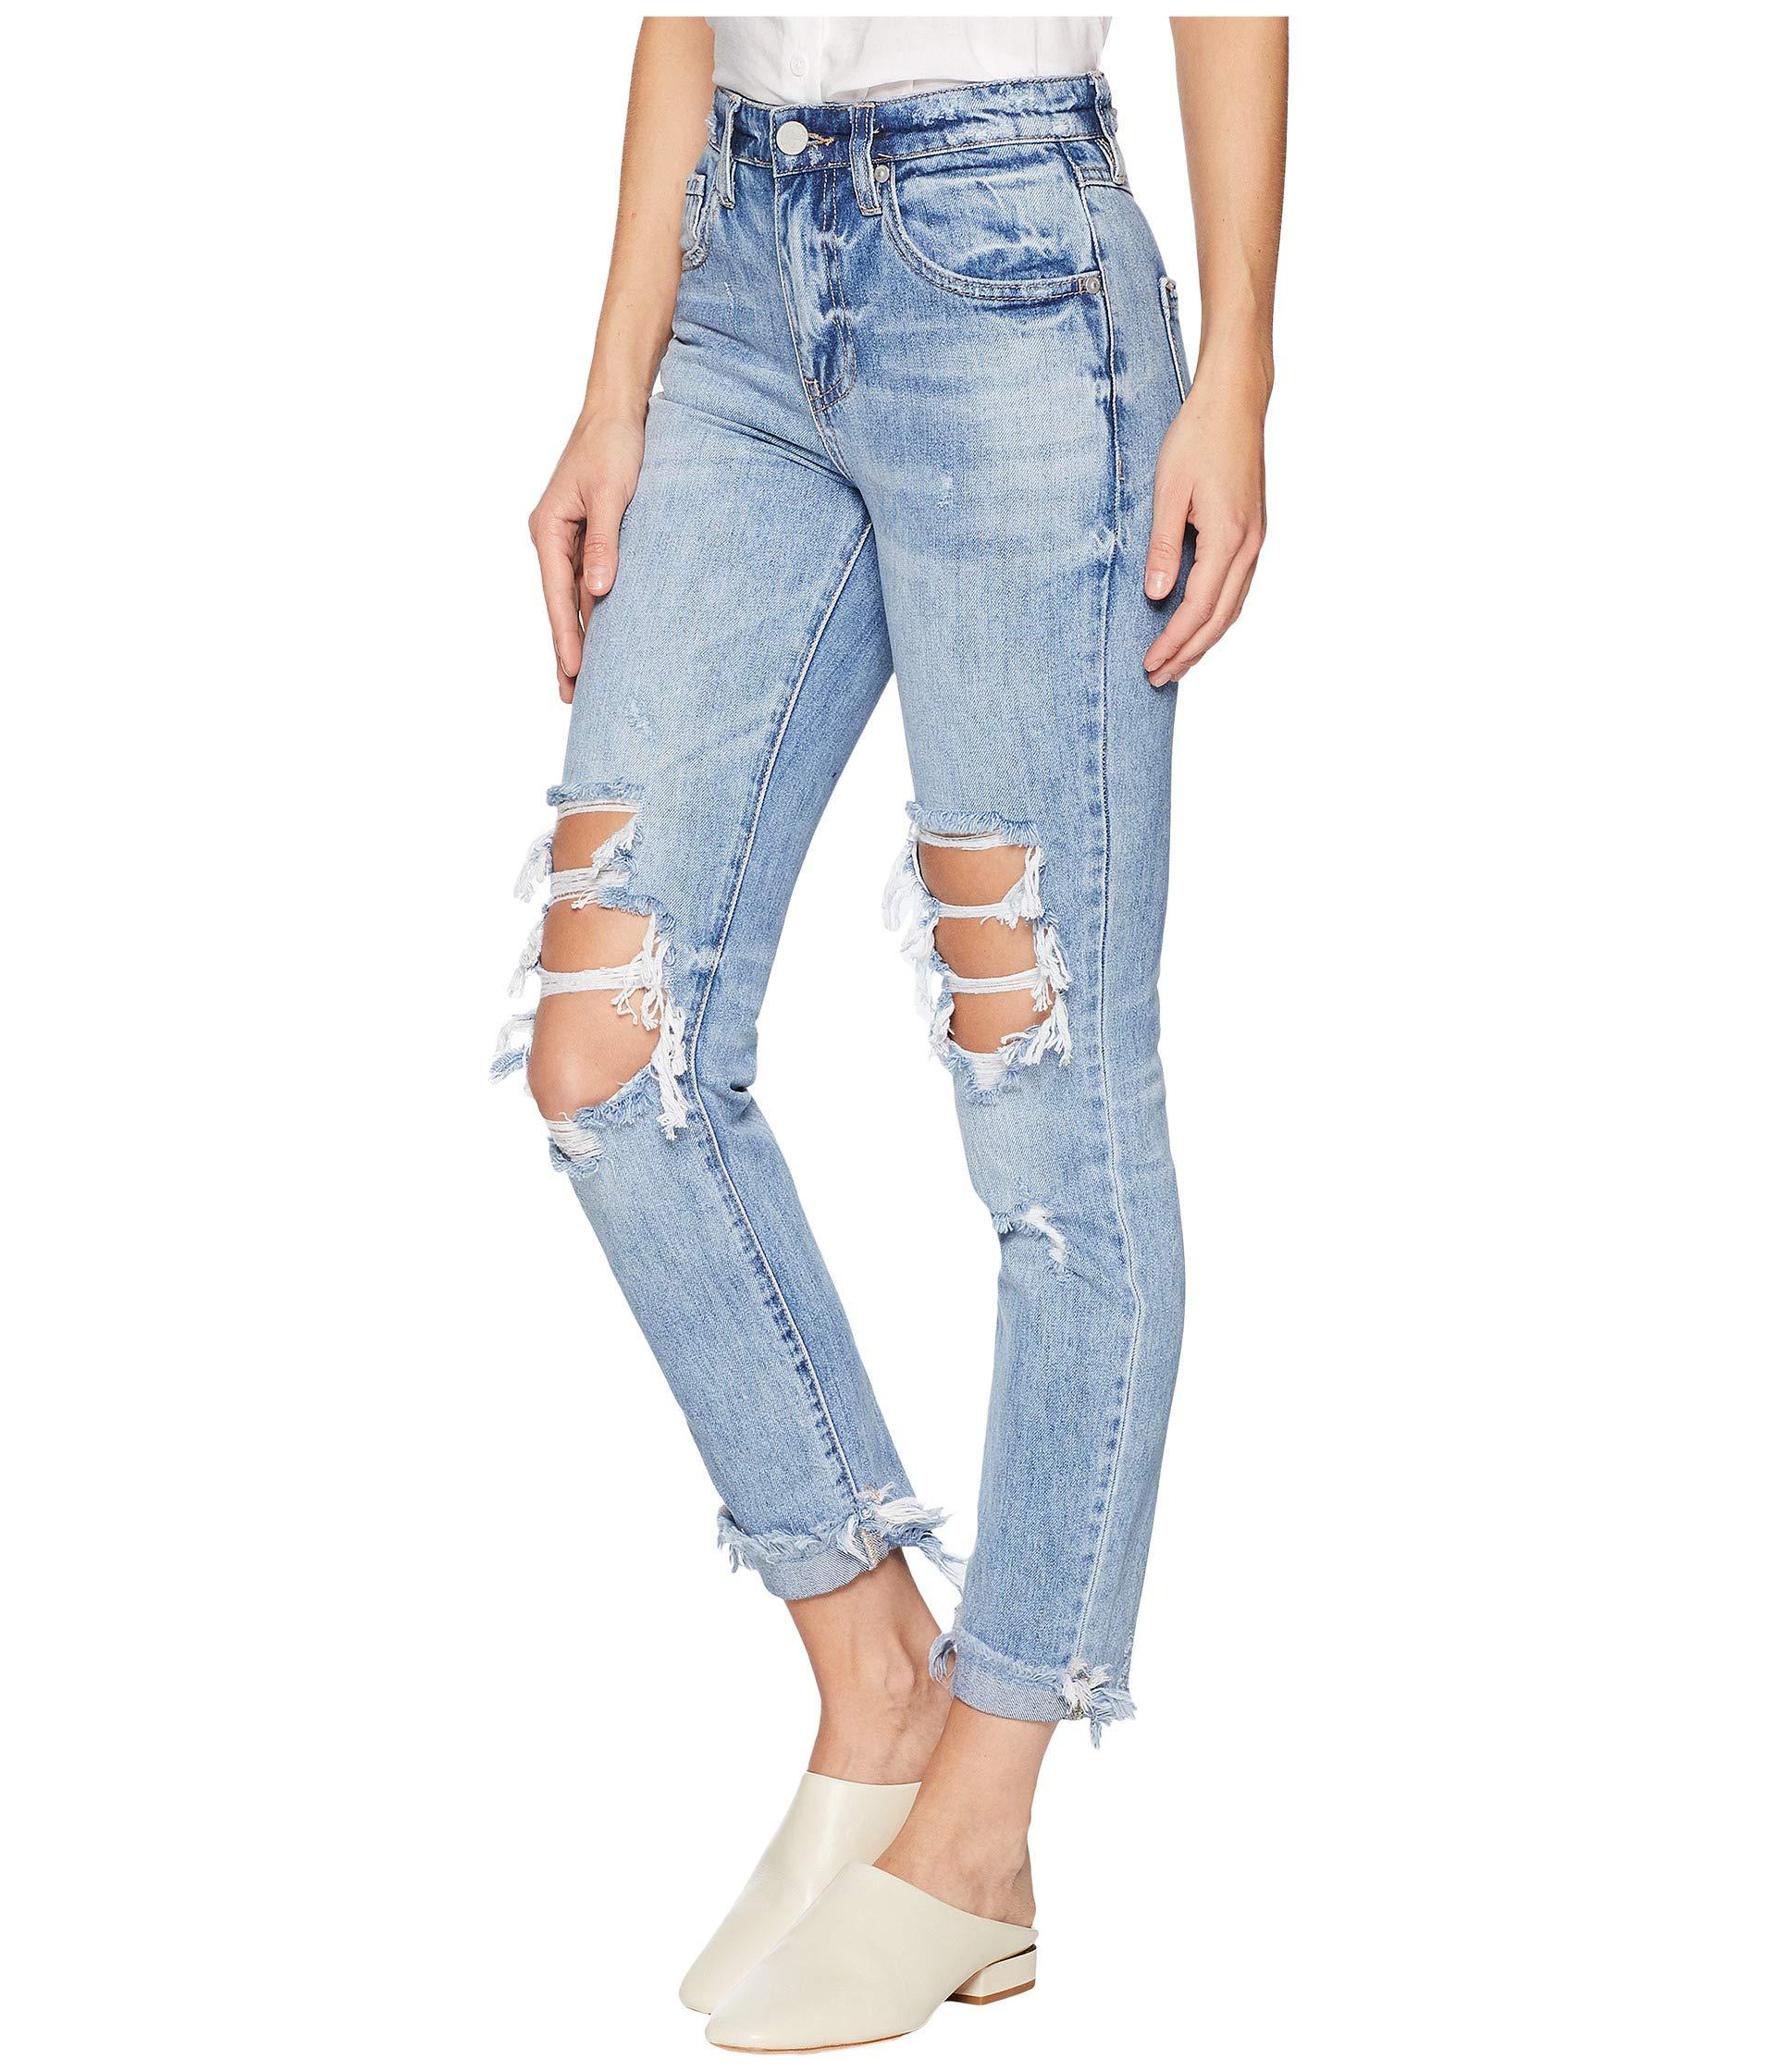 blanknyc rivington jeans